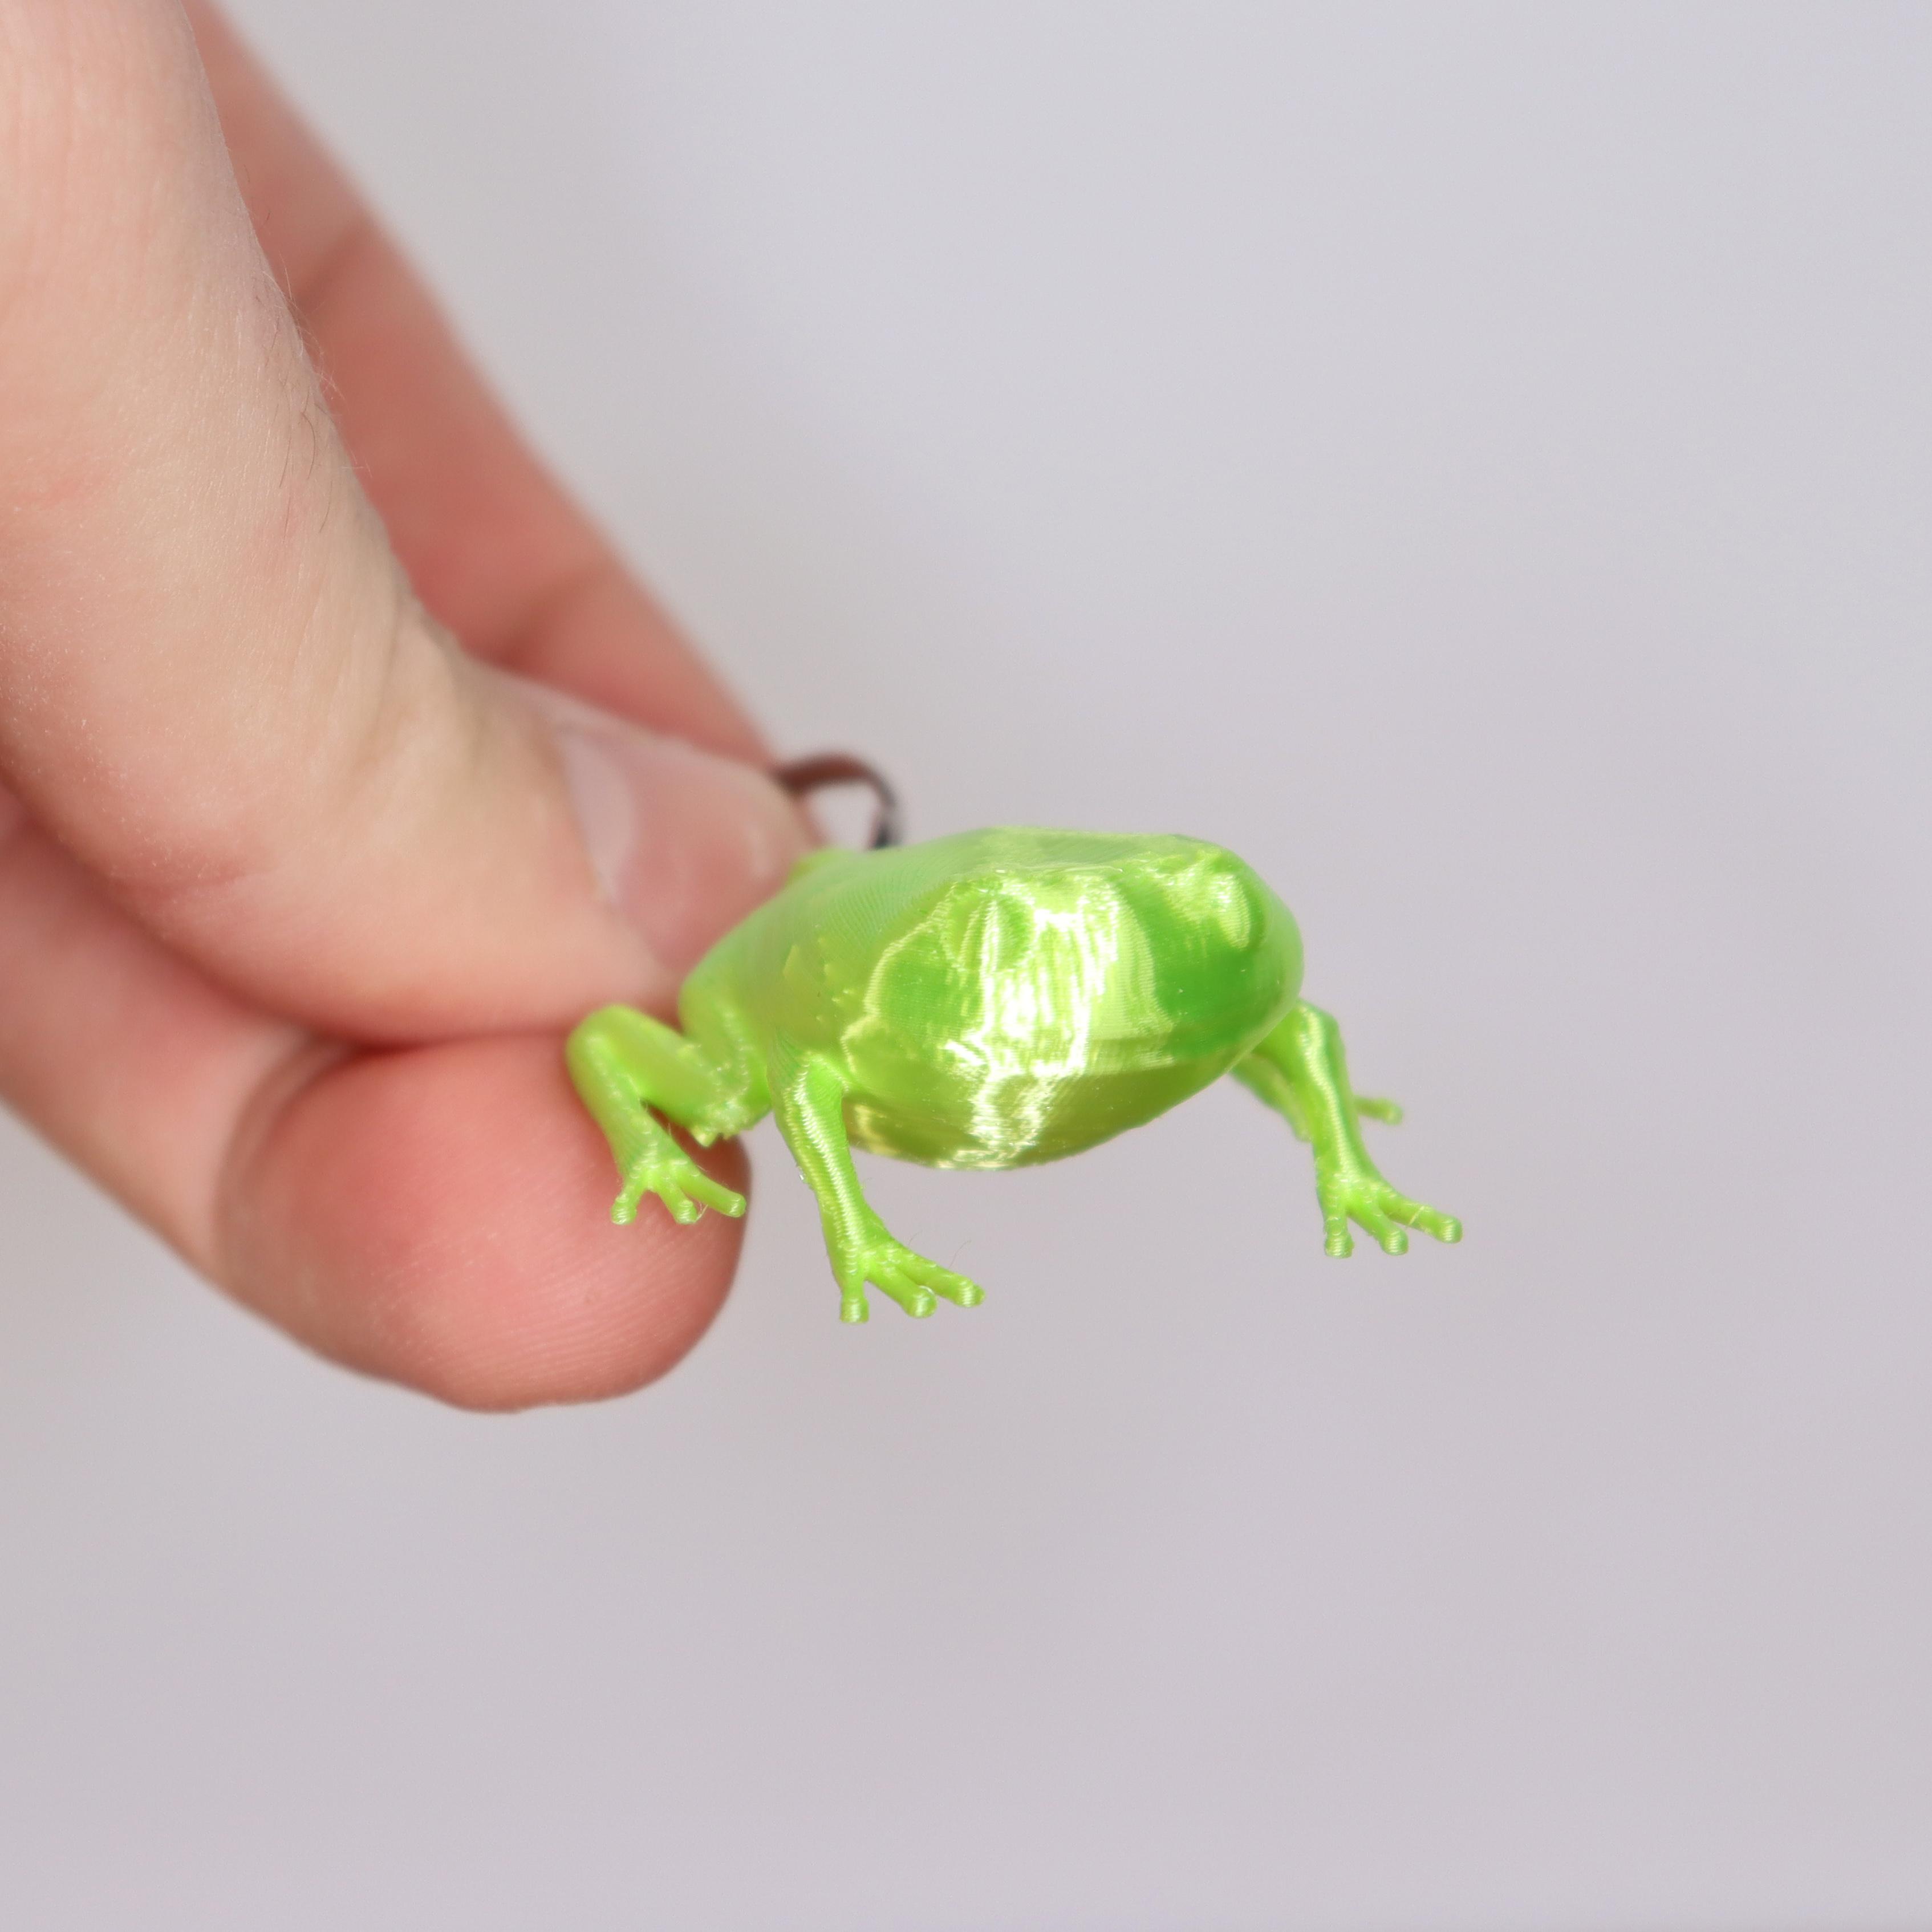 Green tree frog keychain 3d model